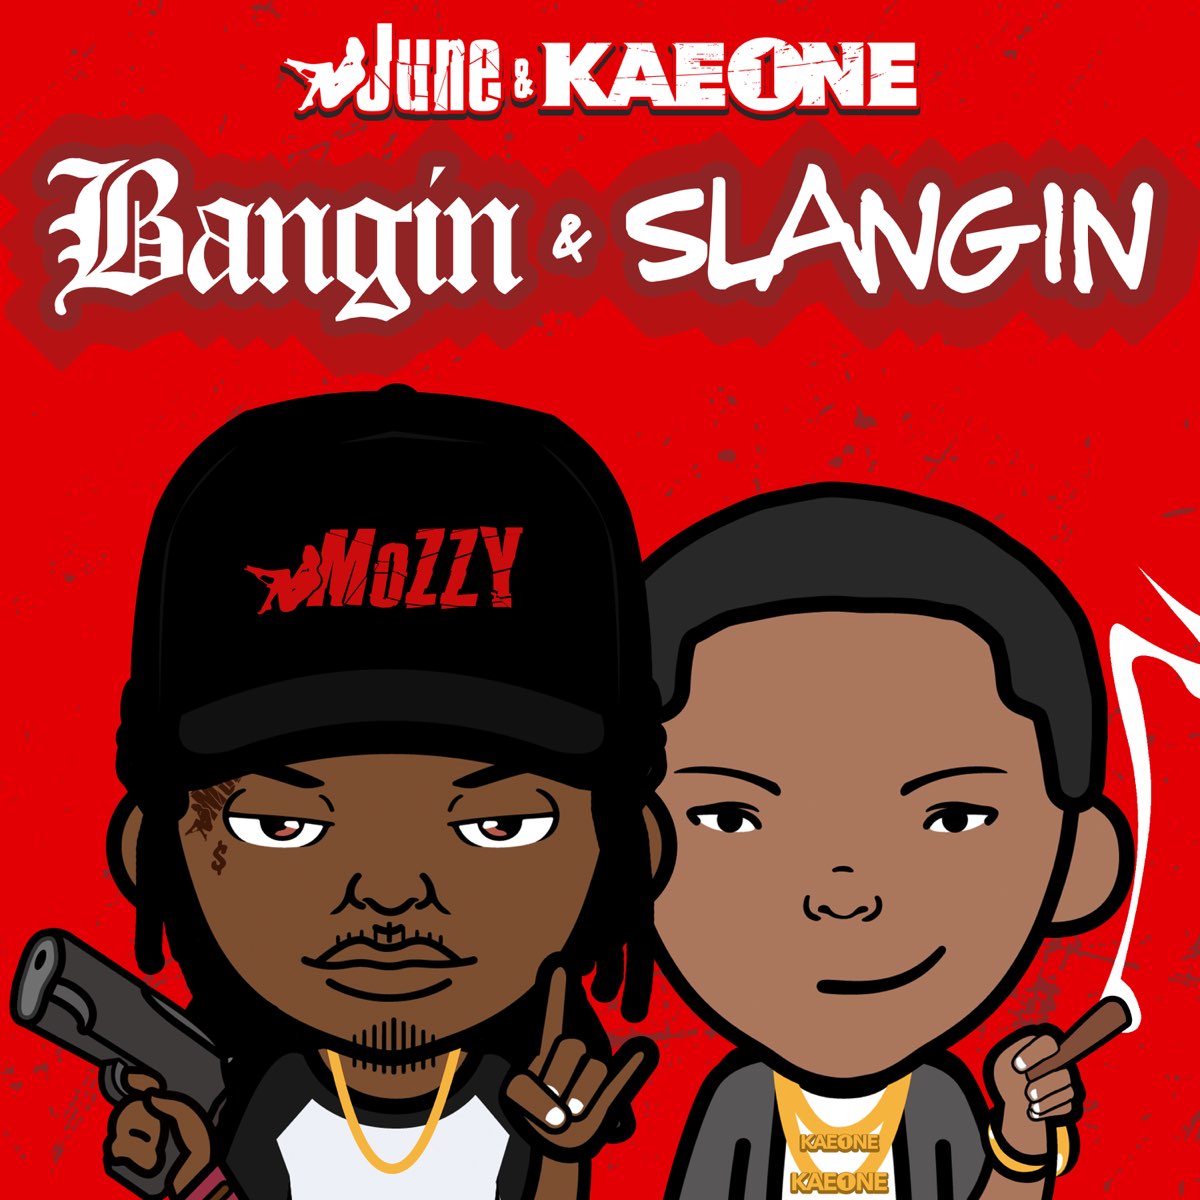 June & Kae One - Bangin & Slangin